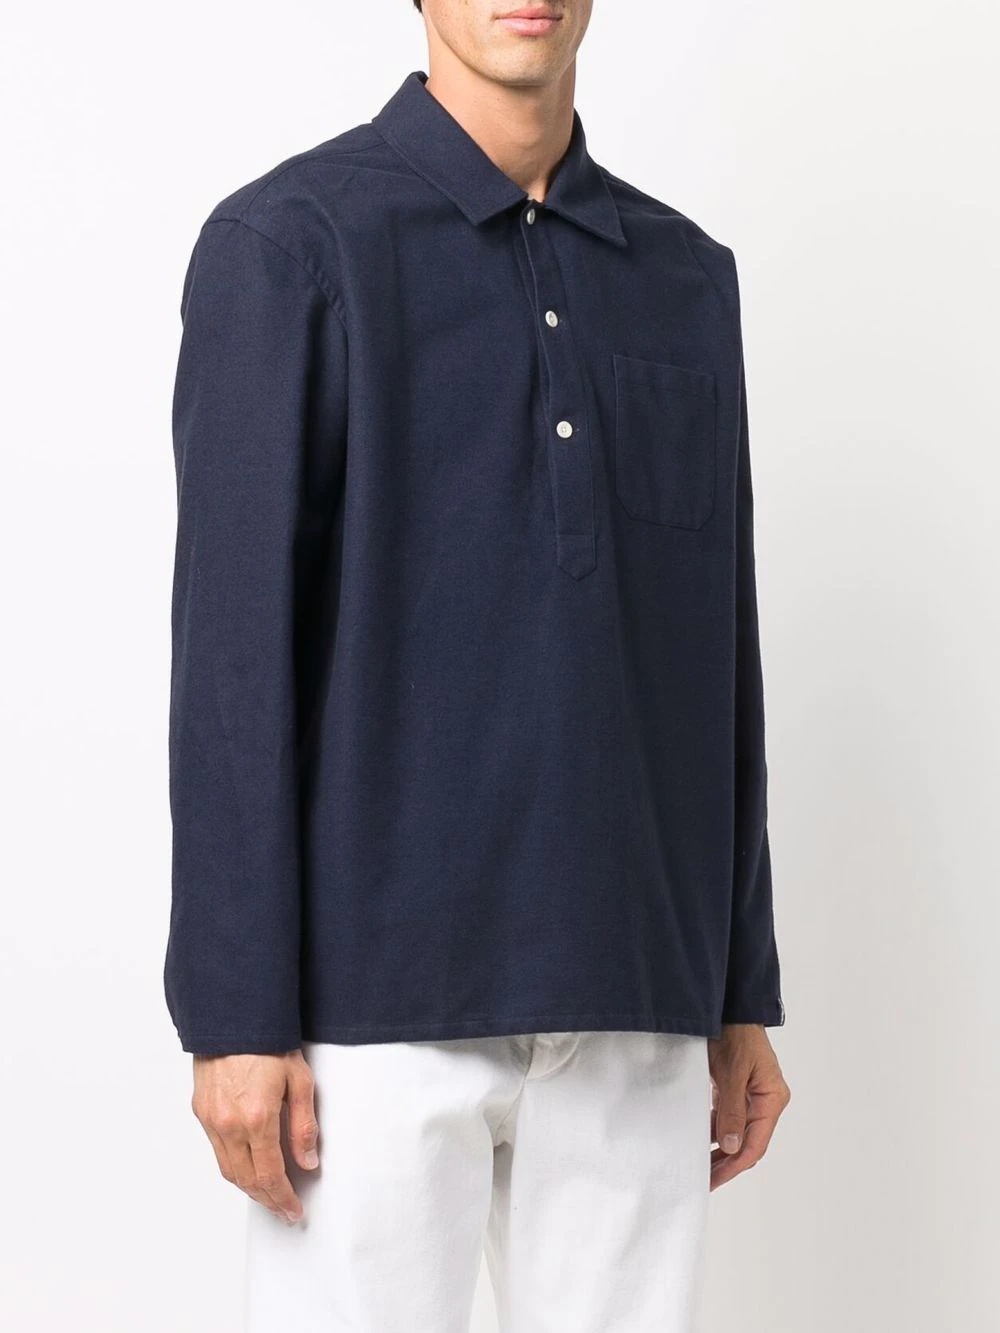 MILITARY cotton shirt - 3